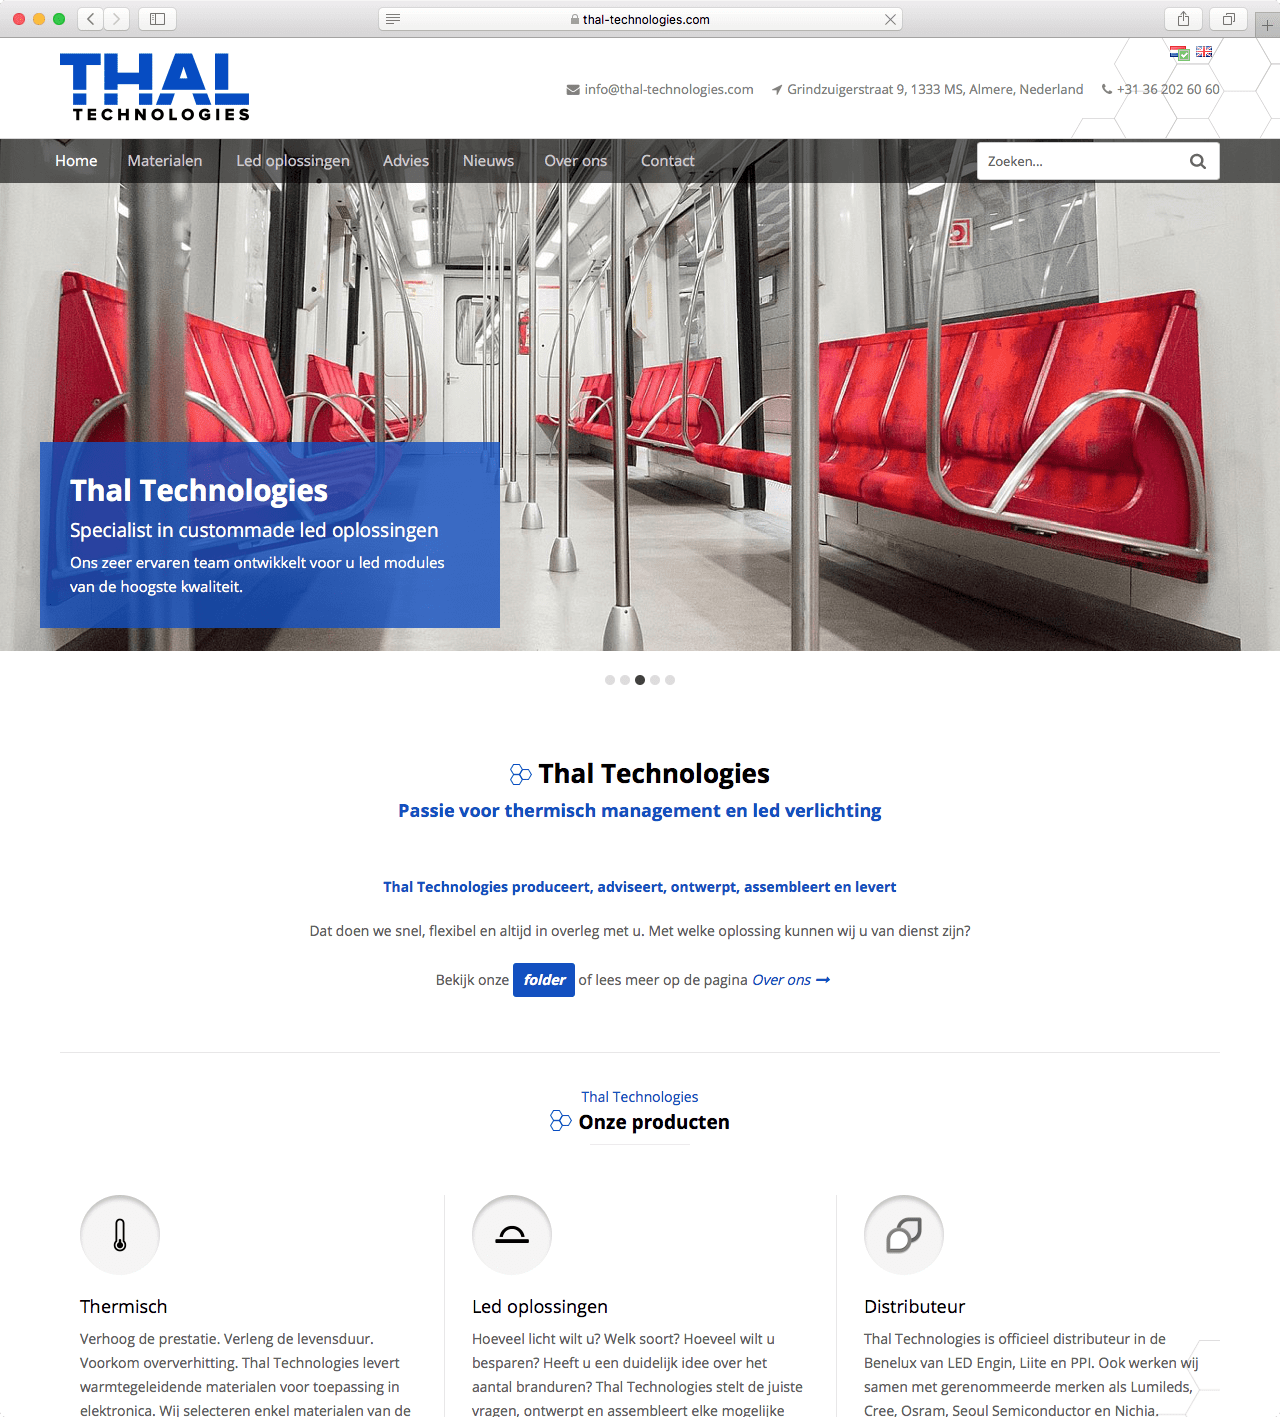 THAL Technologies